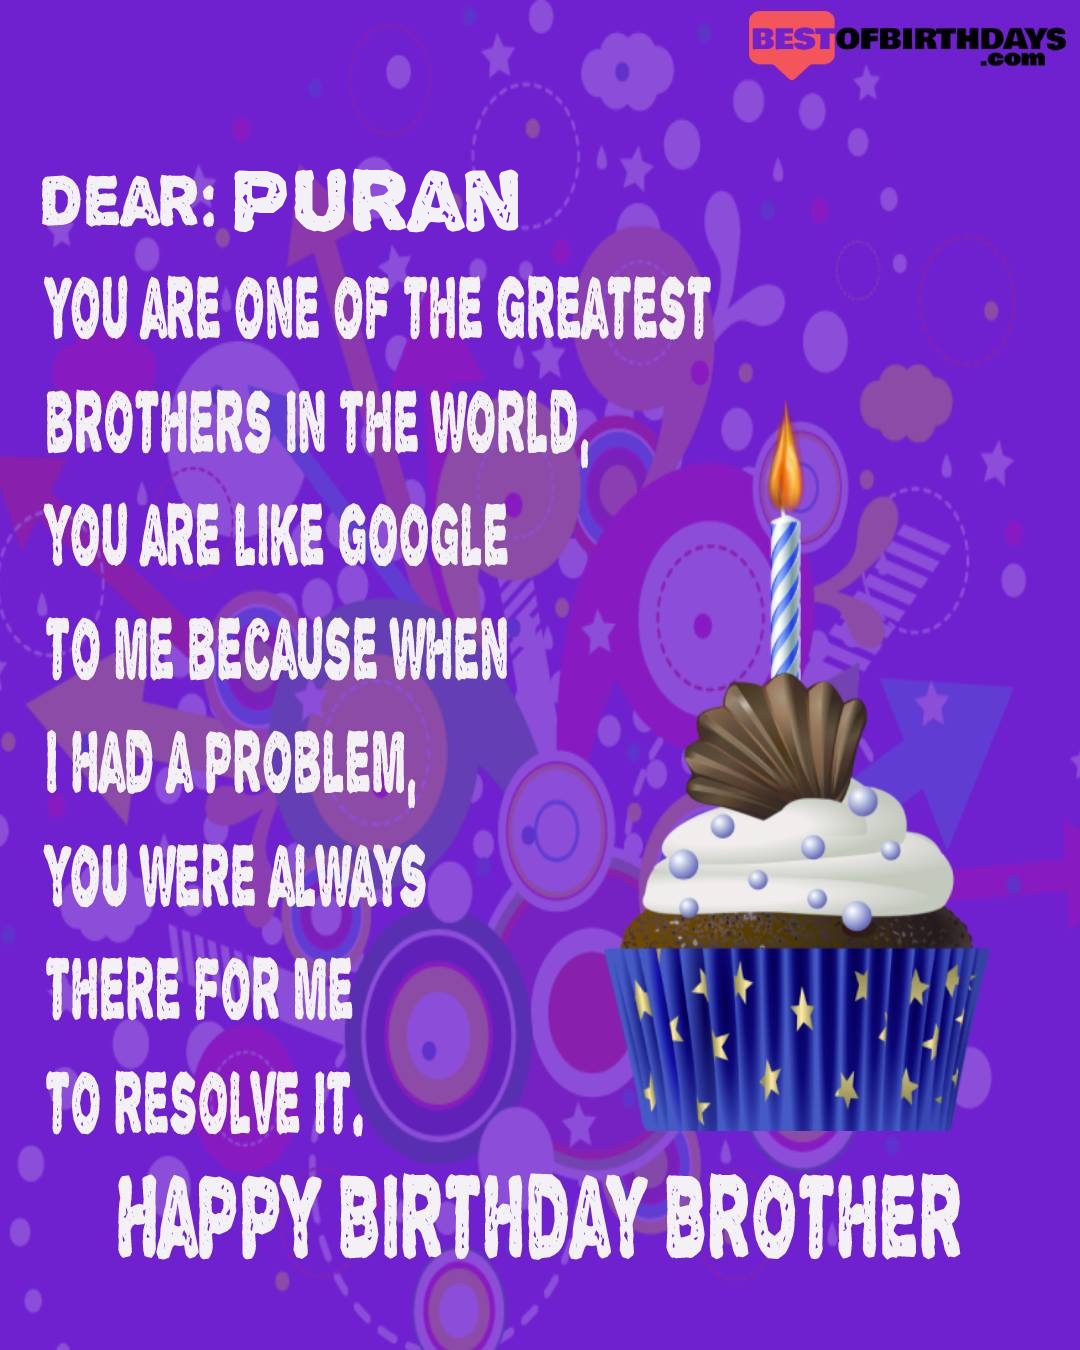 Happy birthday puran bhai brother bro